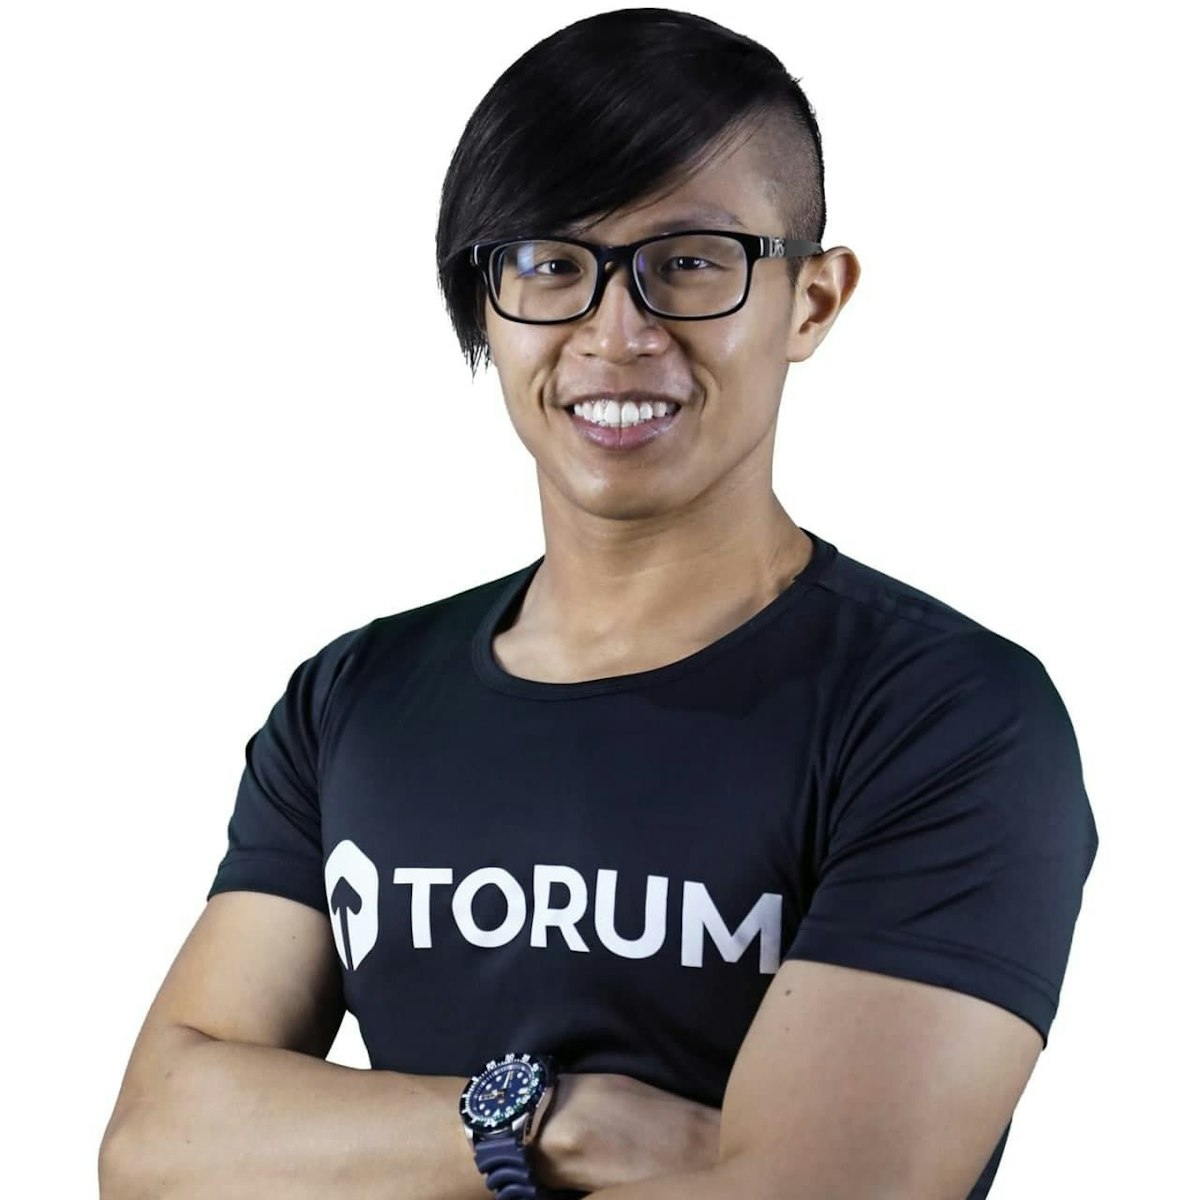 featured image - Building a SocialFi Metaverse: An Interview with Torum CEO Yi Feng Go